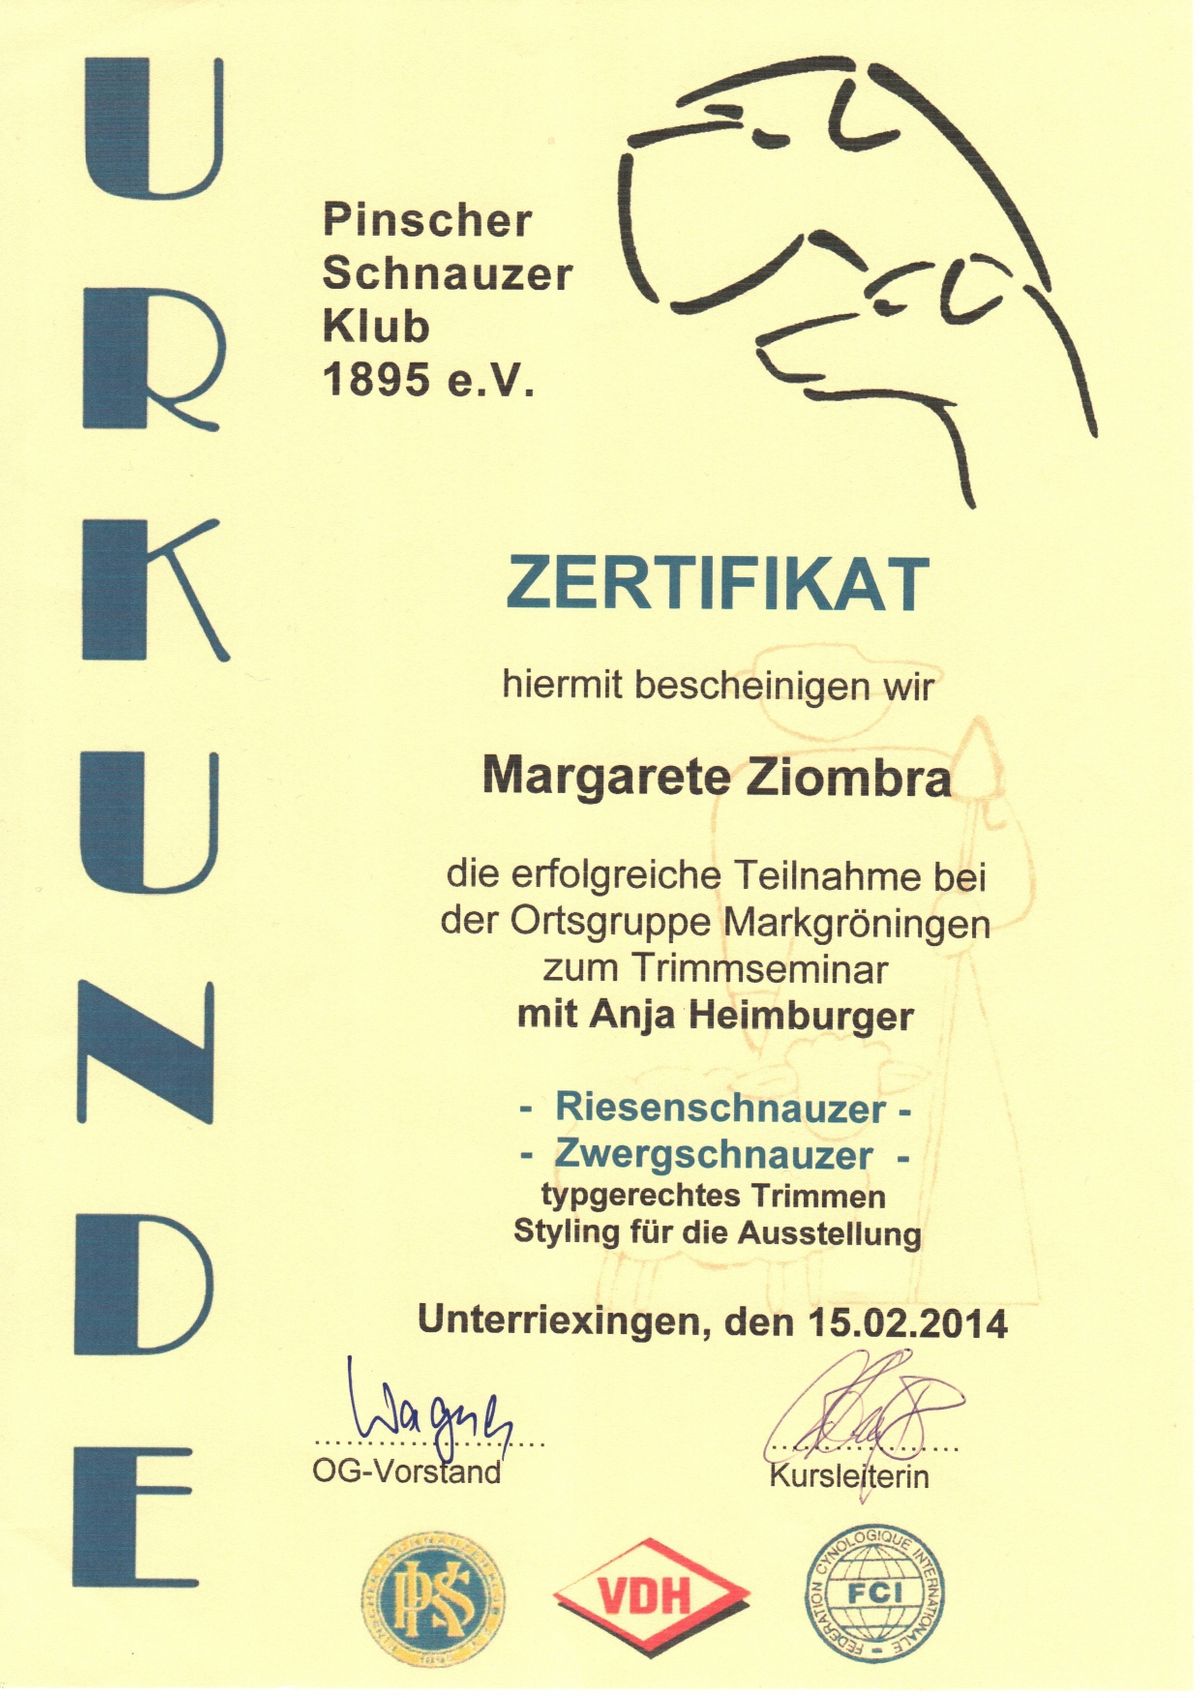 Zertifikat Pinscher Schnauzer_page-0001